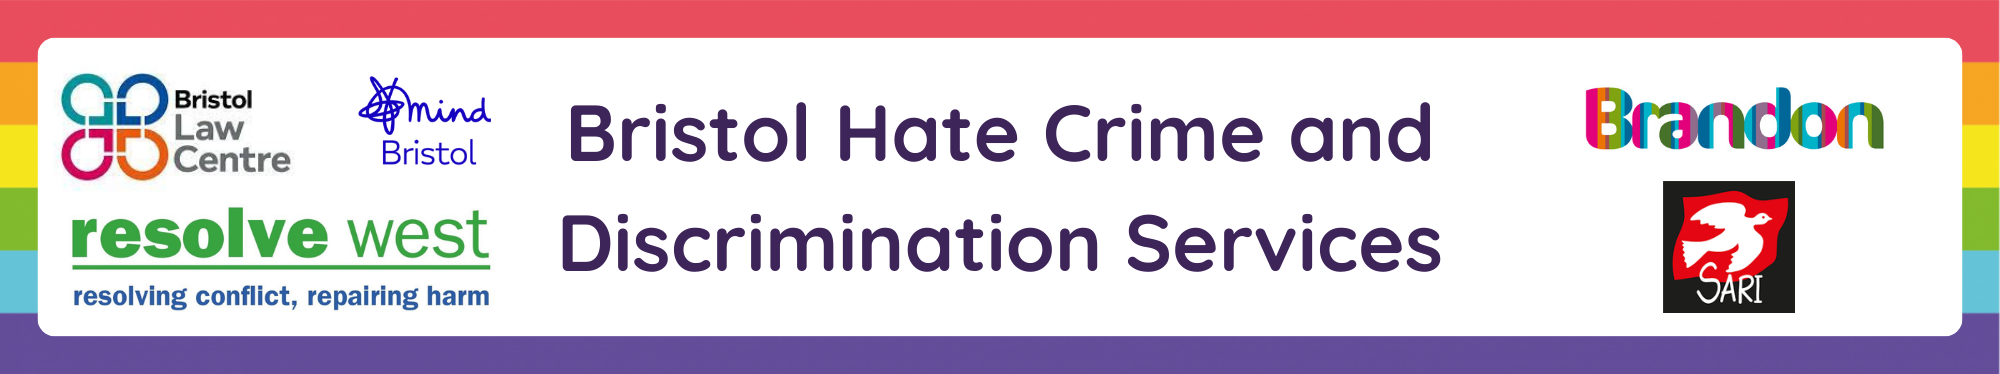 Bristol Hate Crime and Discrimination Services